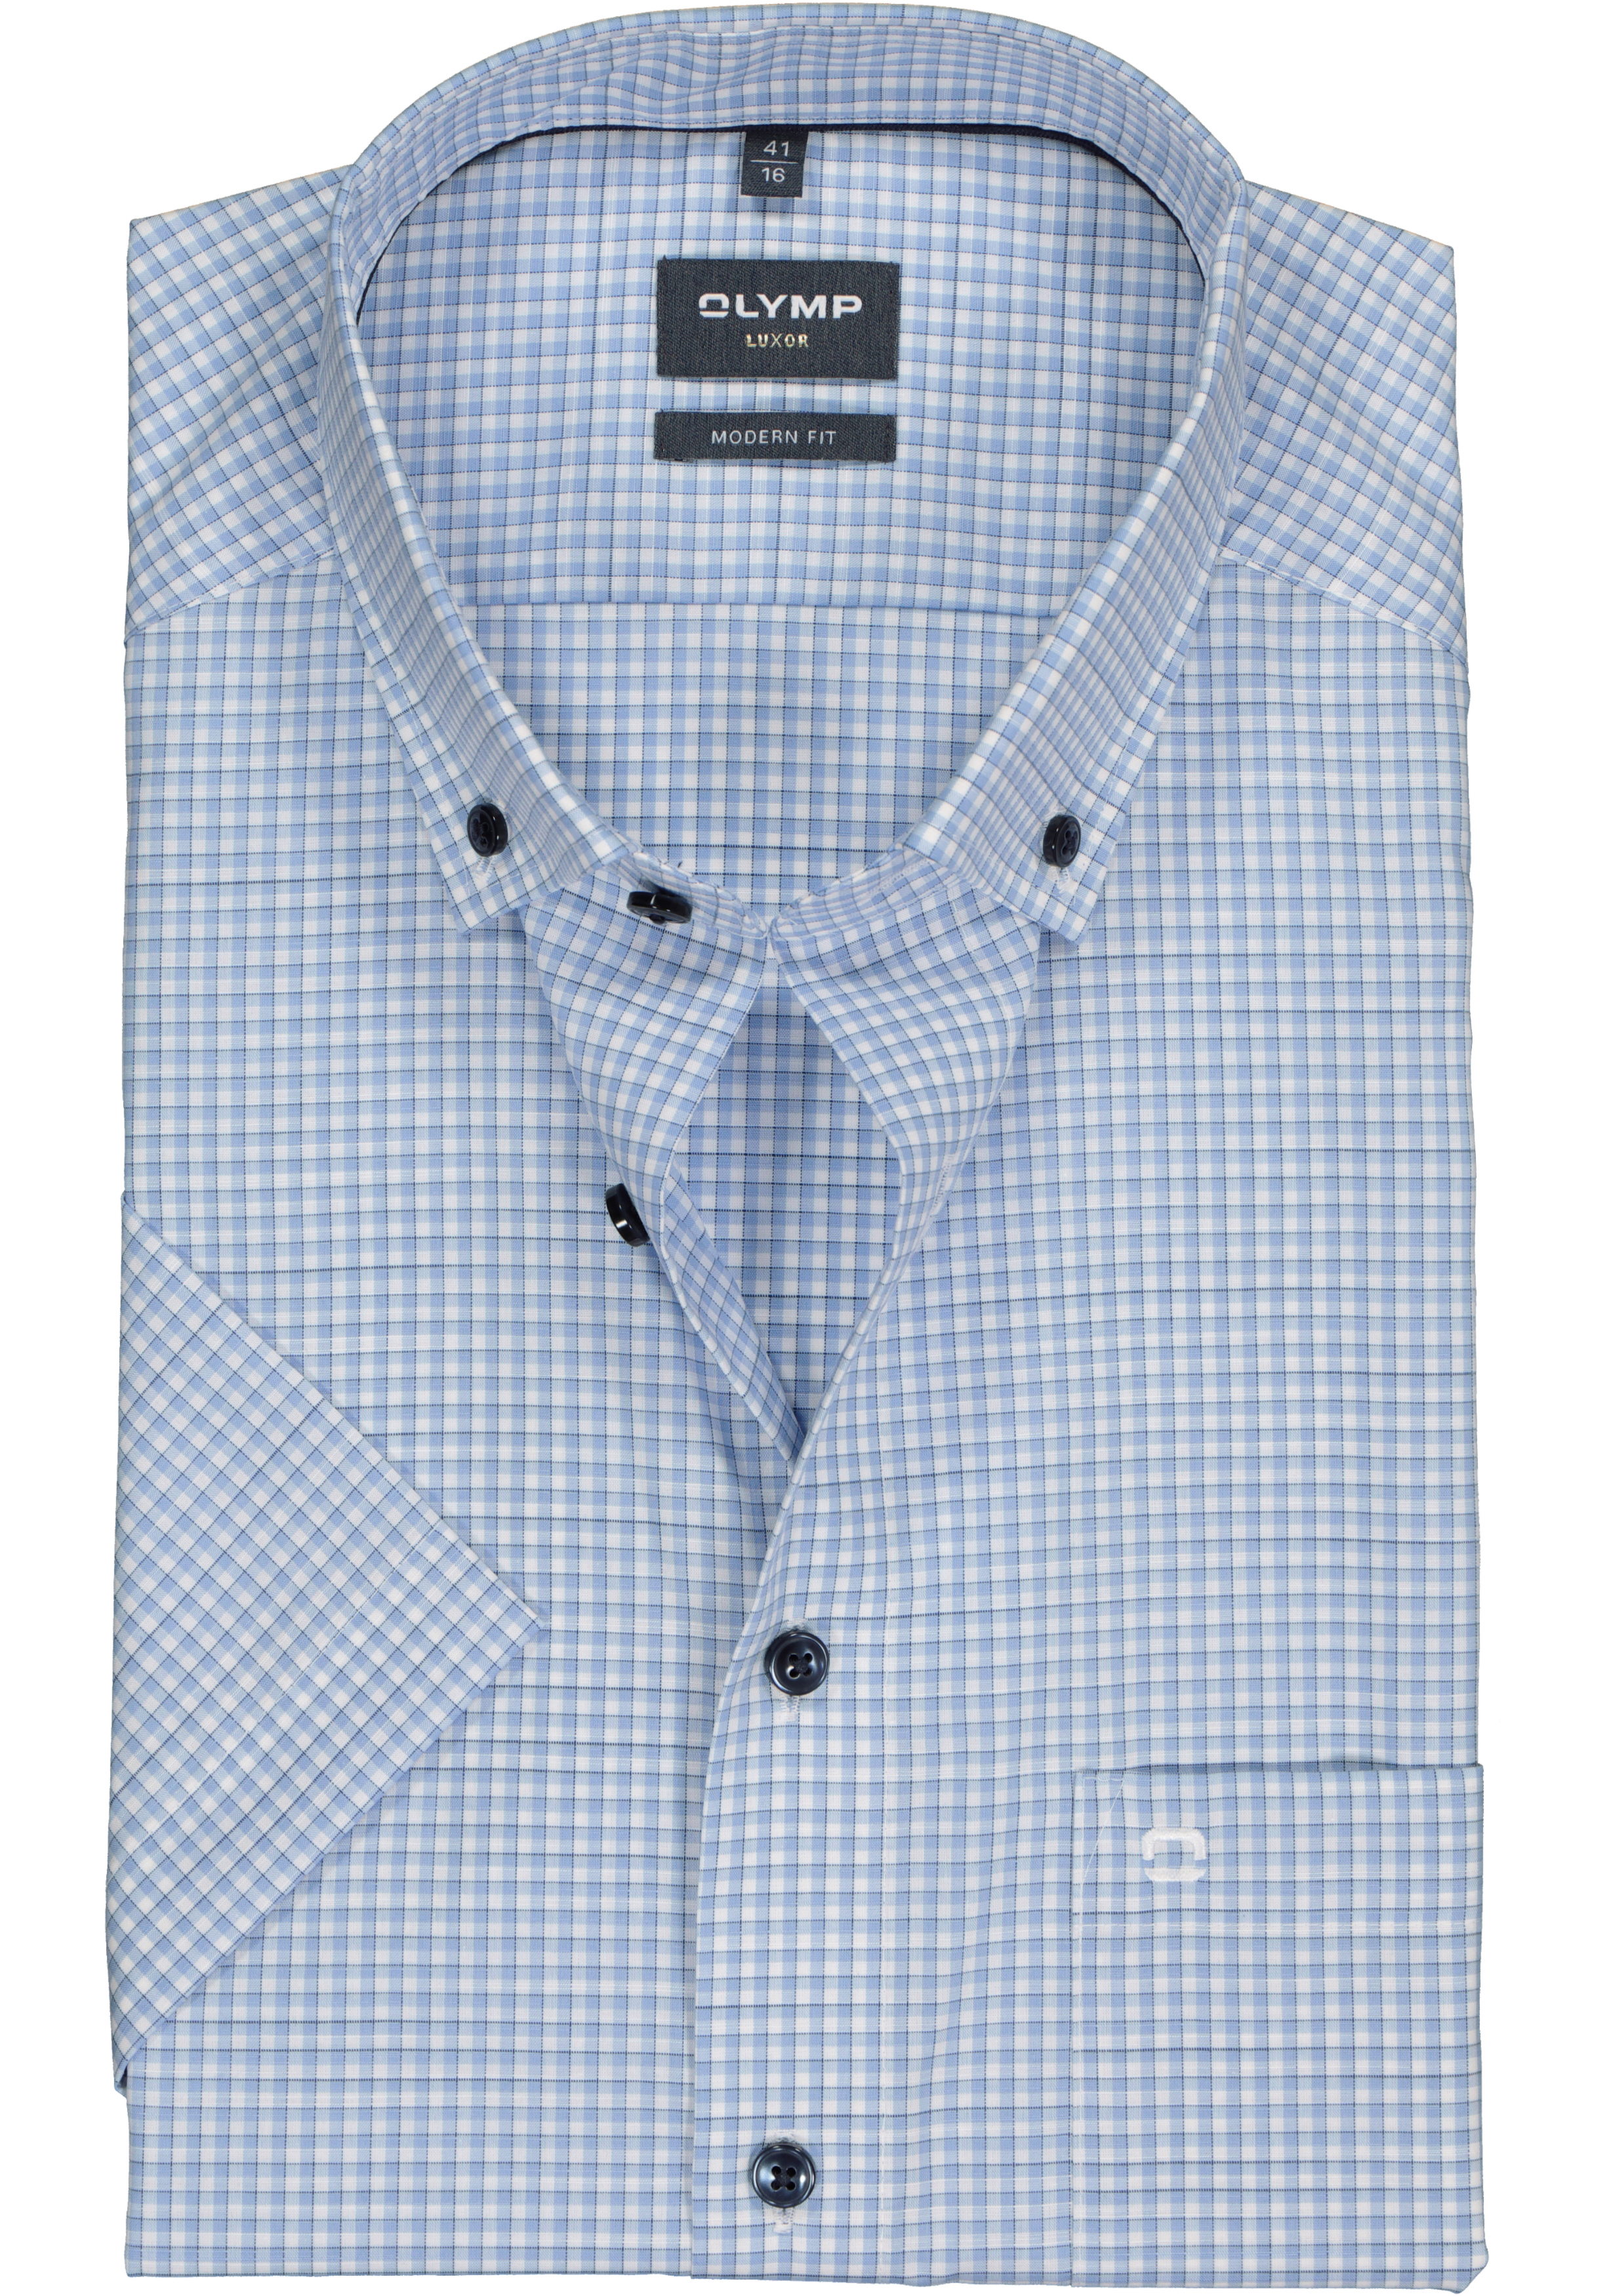 OLYMP modern fit overhemd, korte mouw, popeline, lichtblauw met wit geruit